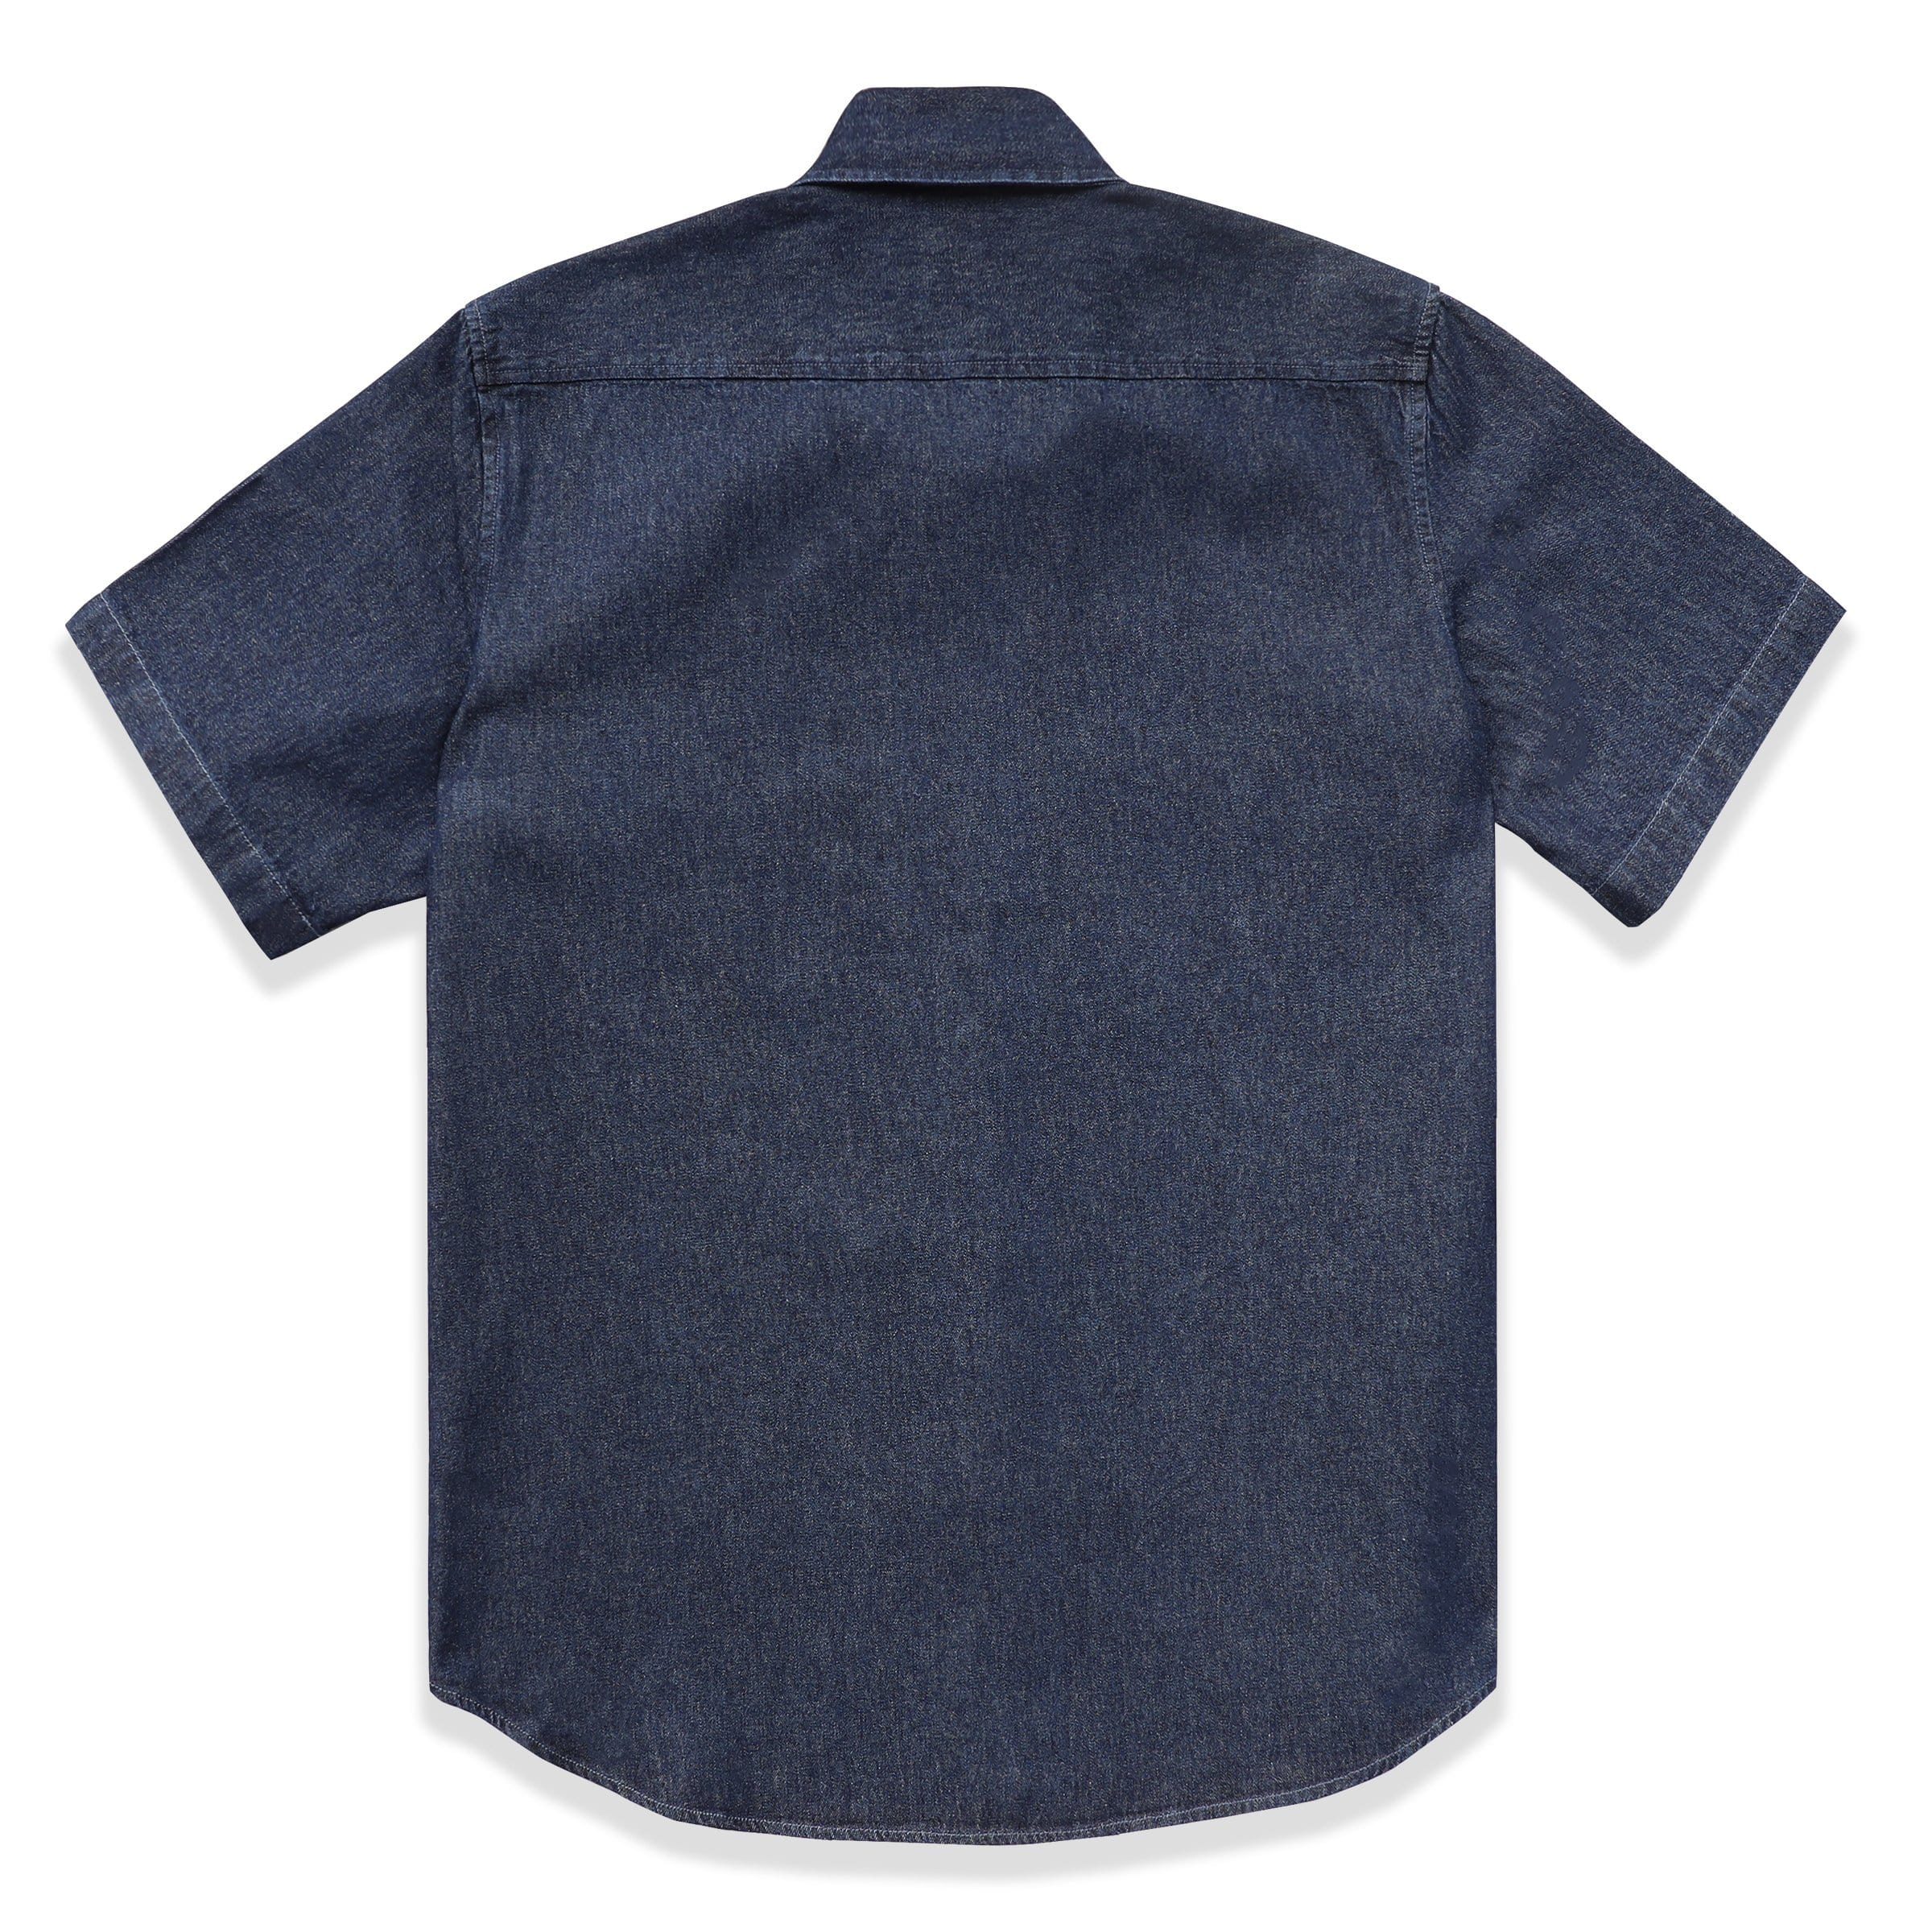 Men's cotton short-sleeved denim shirt #5500